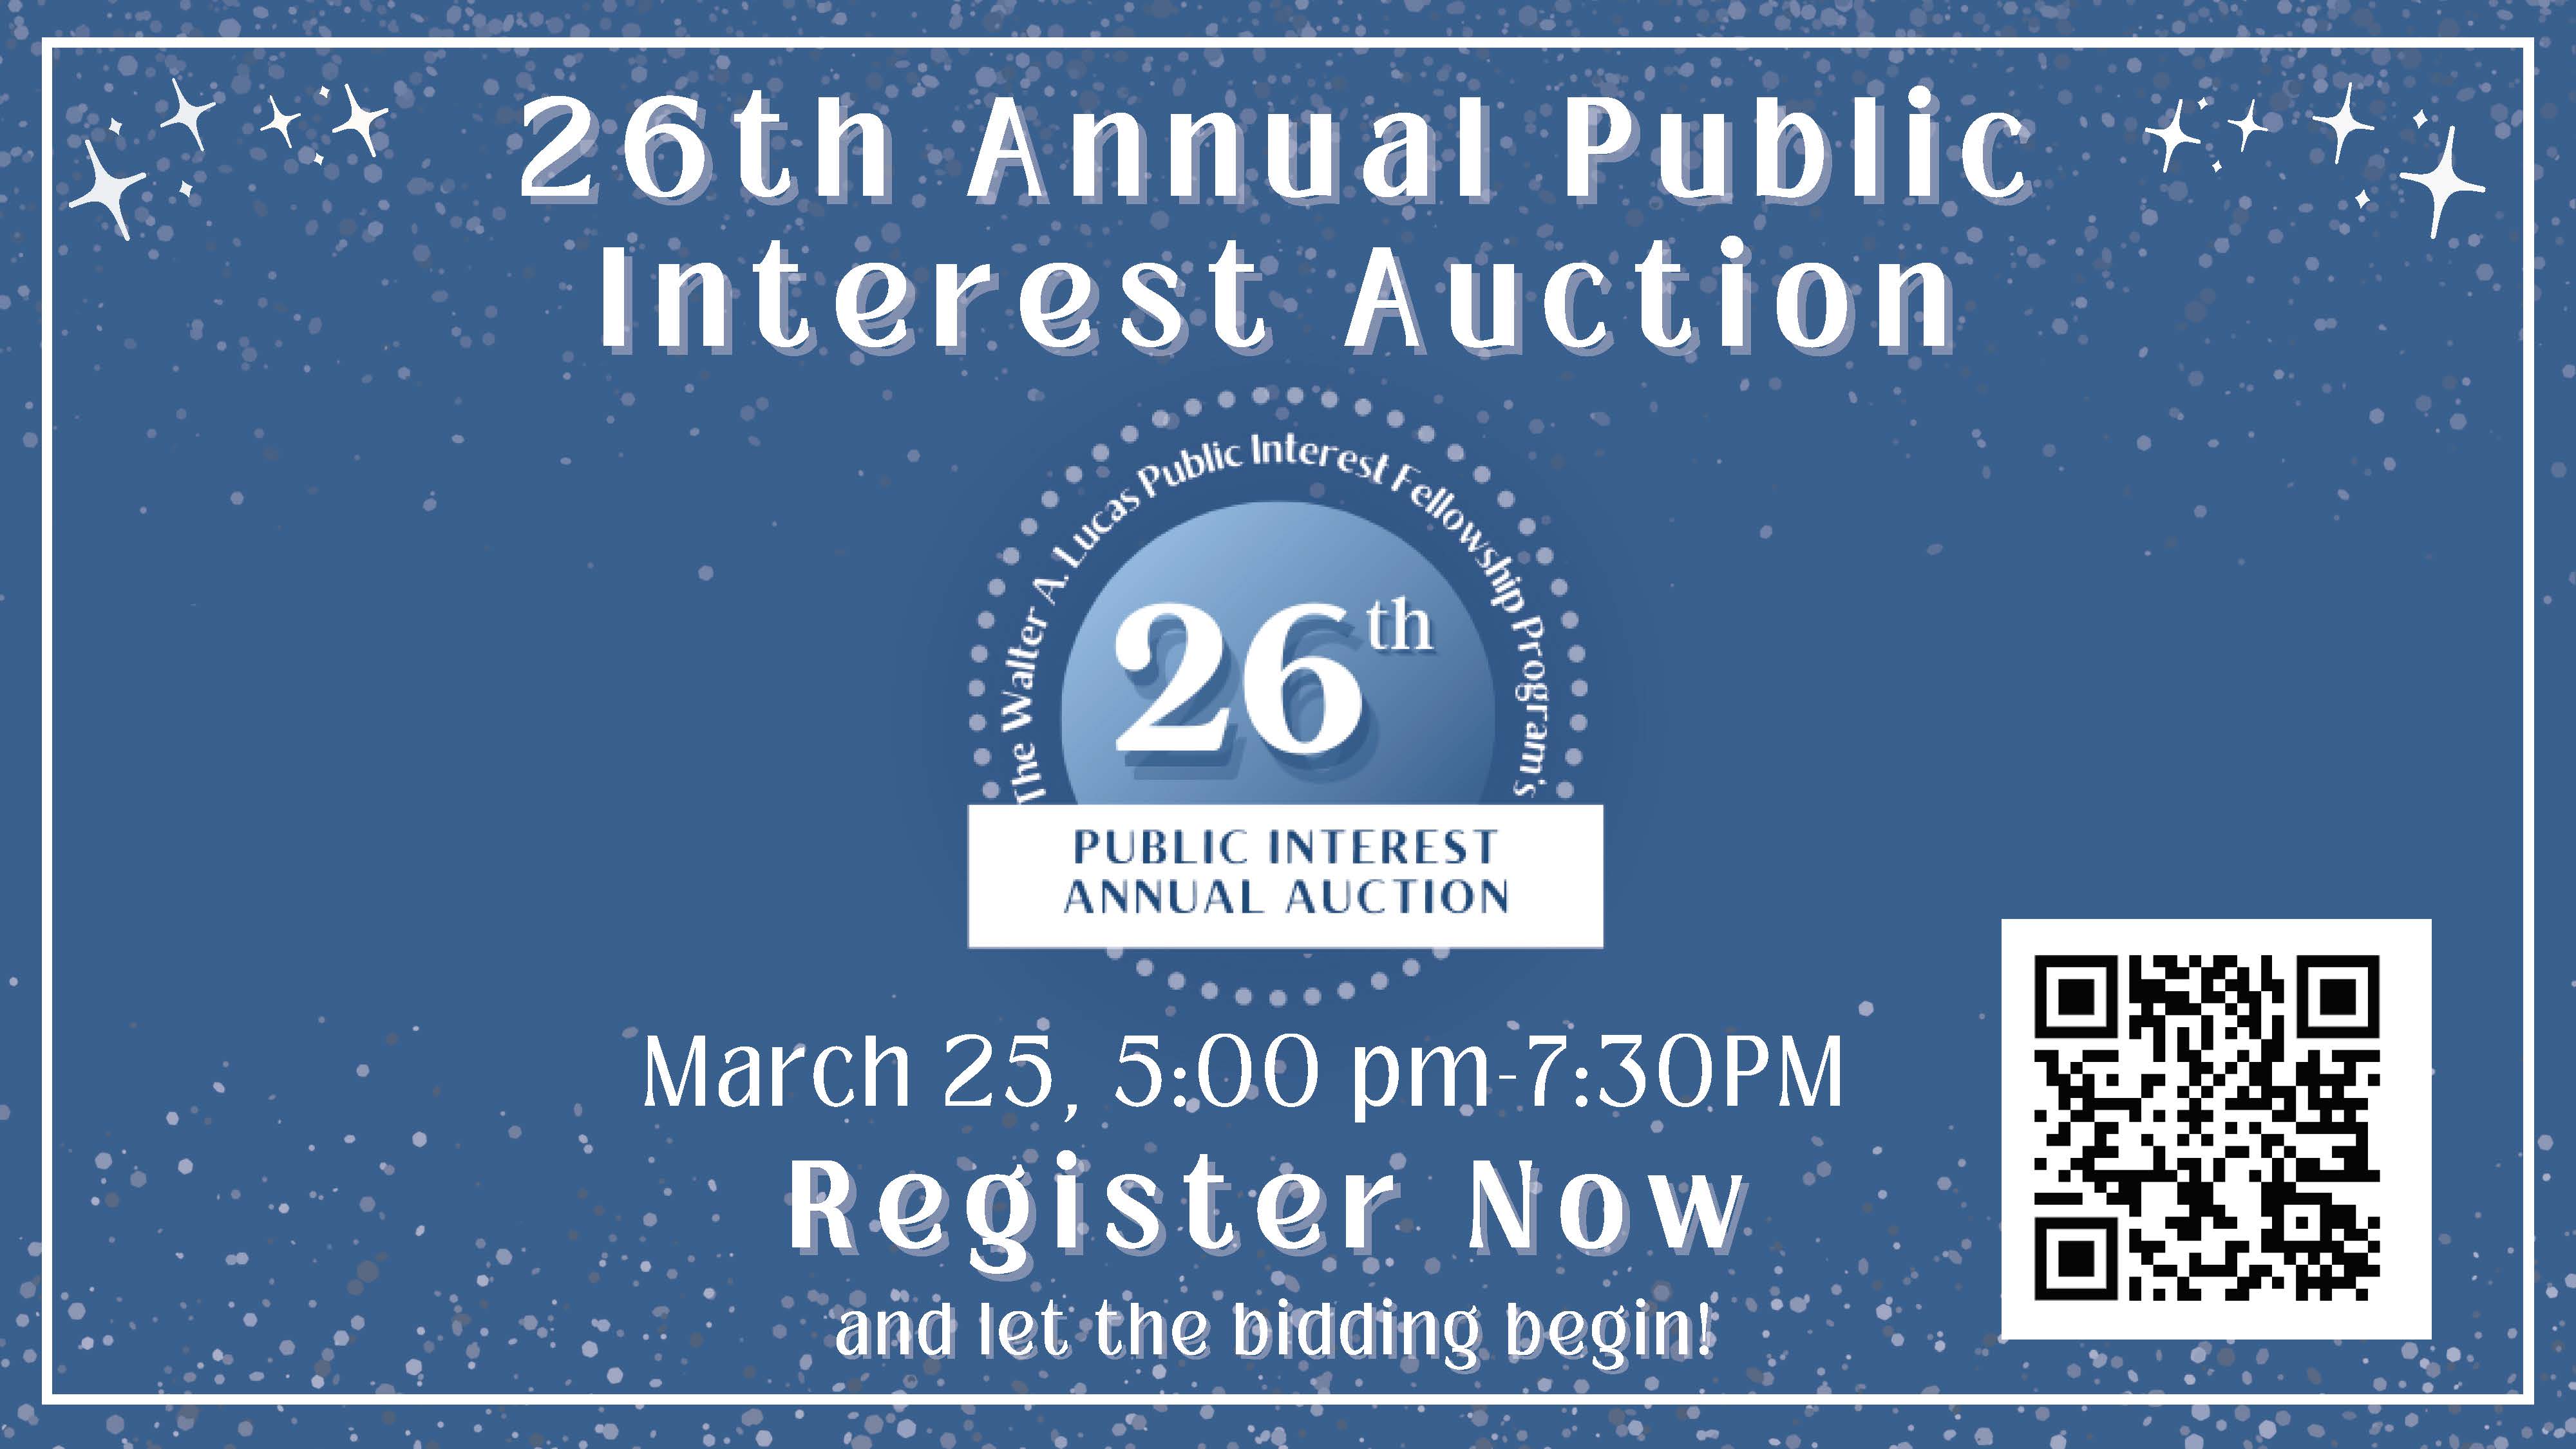 26th Annual Public Interest Auction Flyer March 25, 2023 features QR code for registration